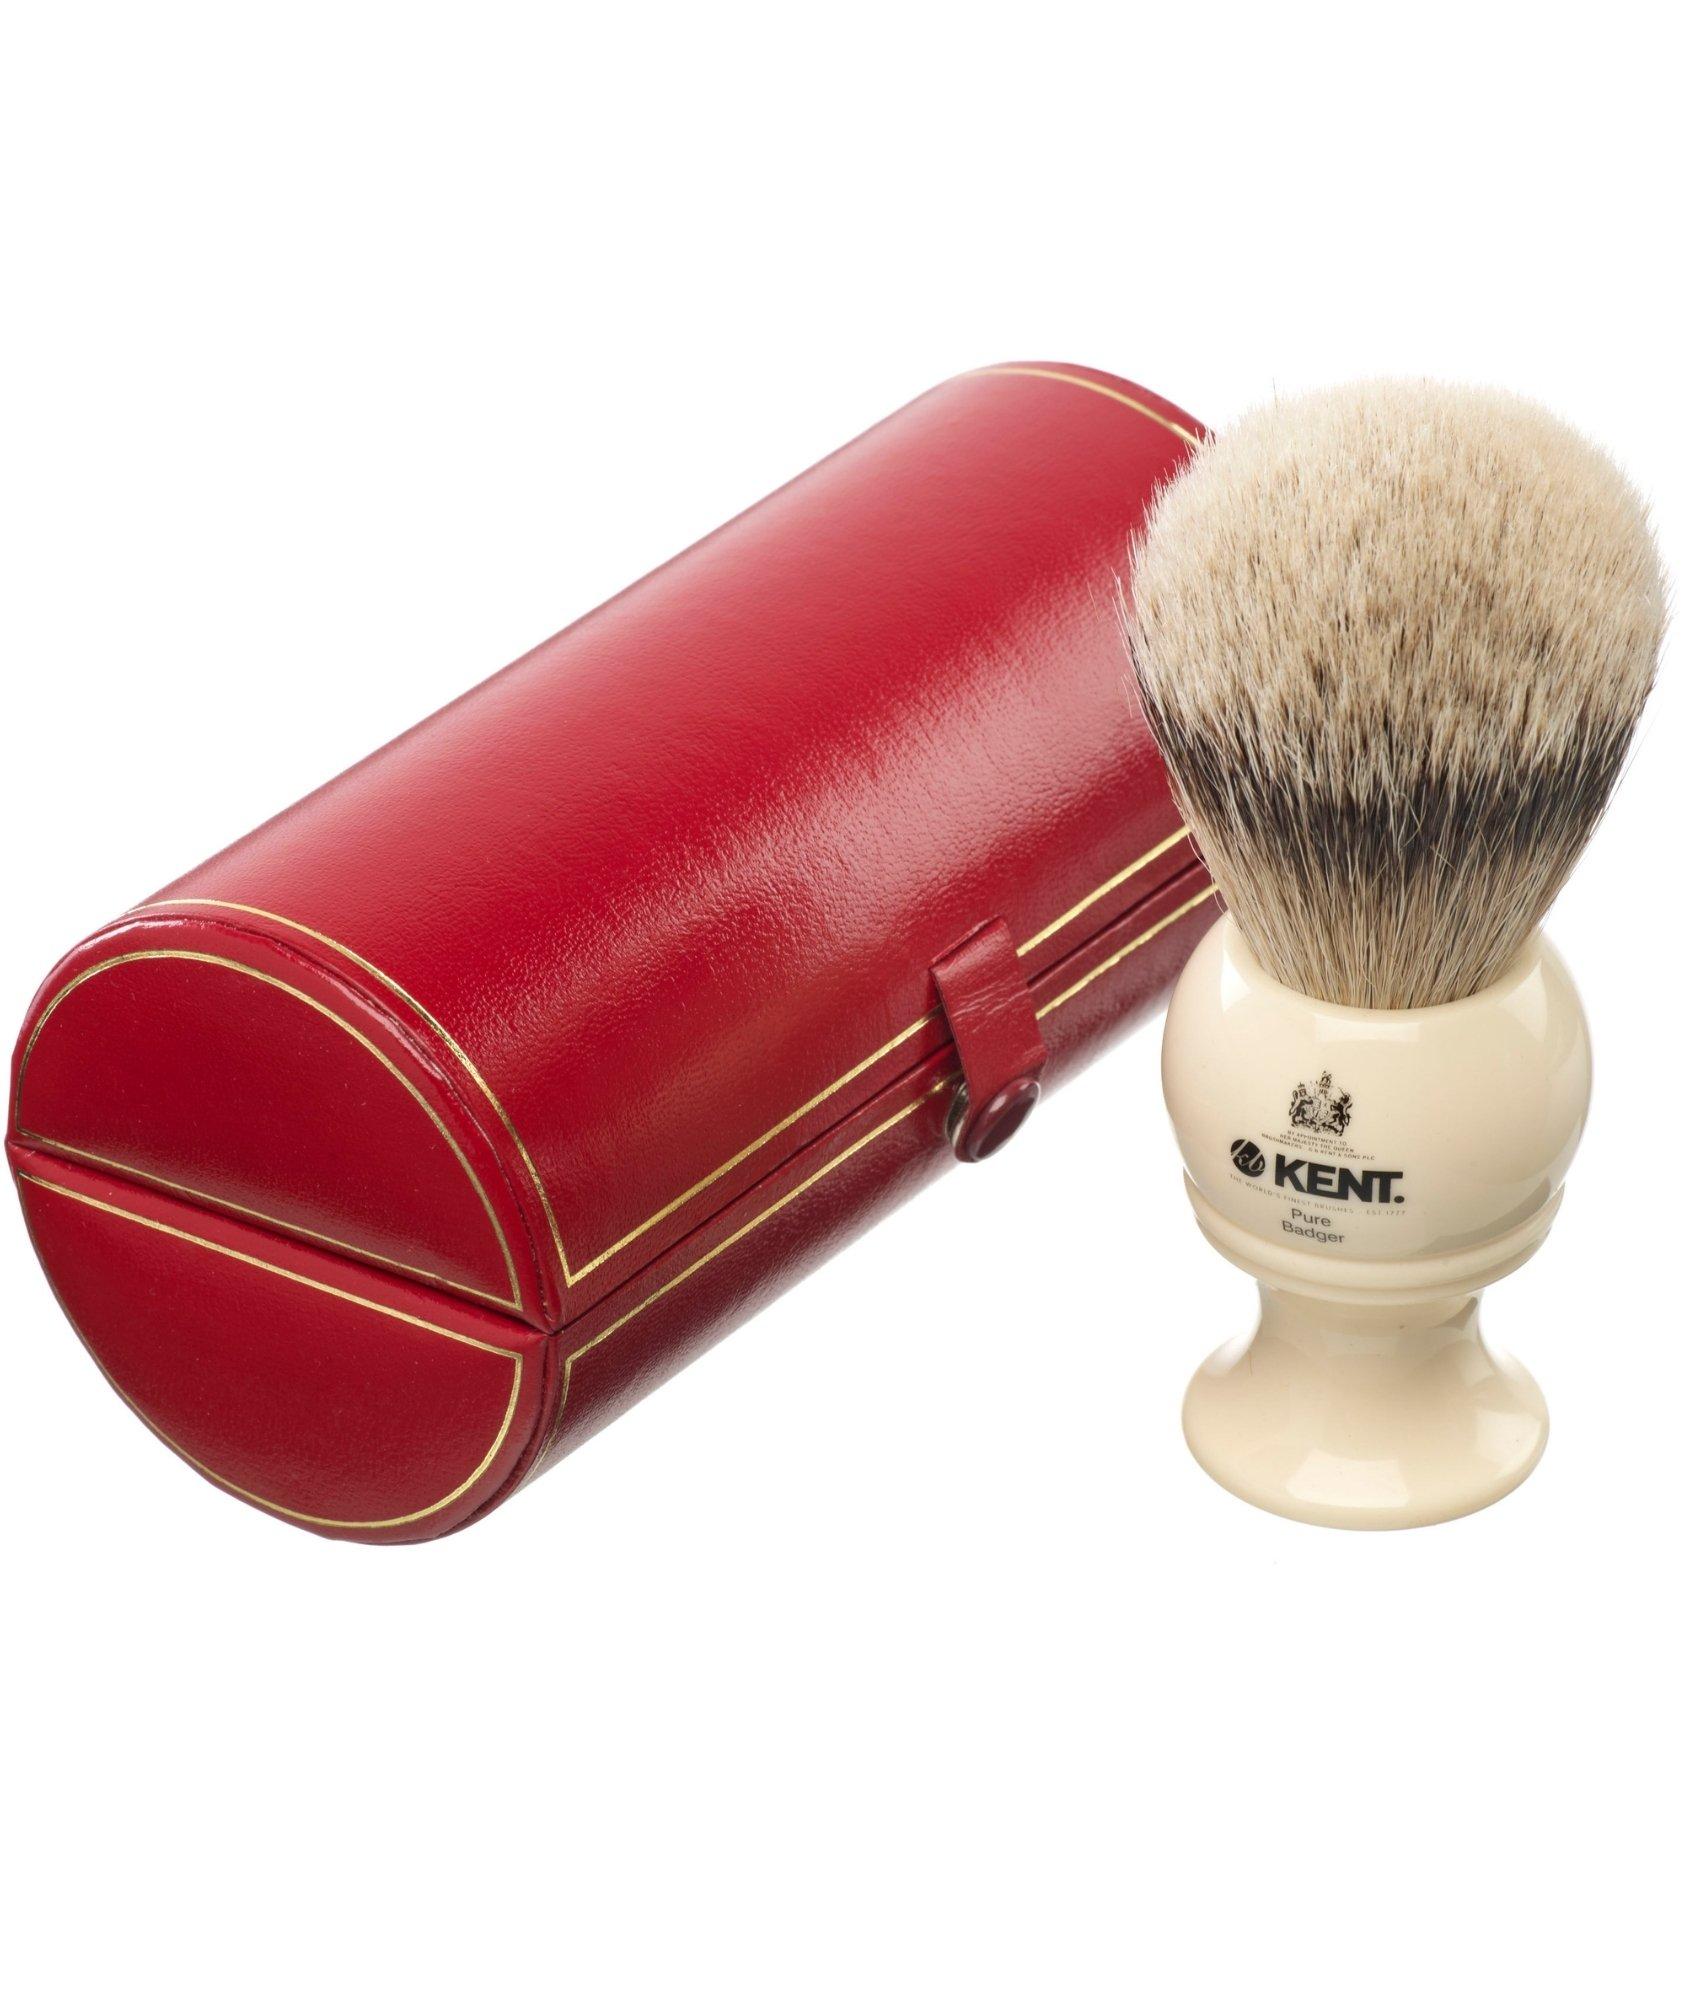 Kent Shaving Brush, Pure Silver Tip Badger, Large image 0